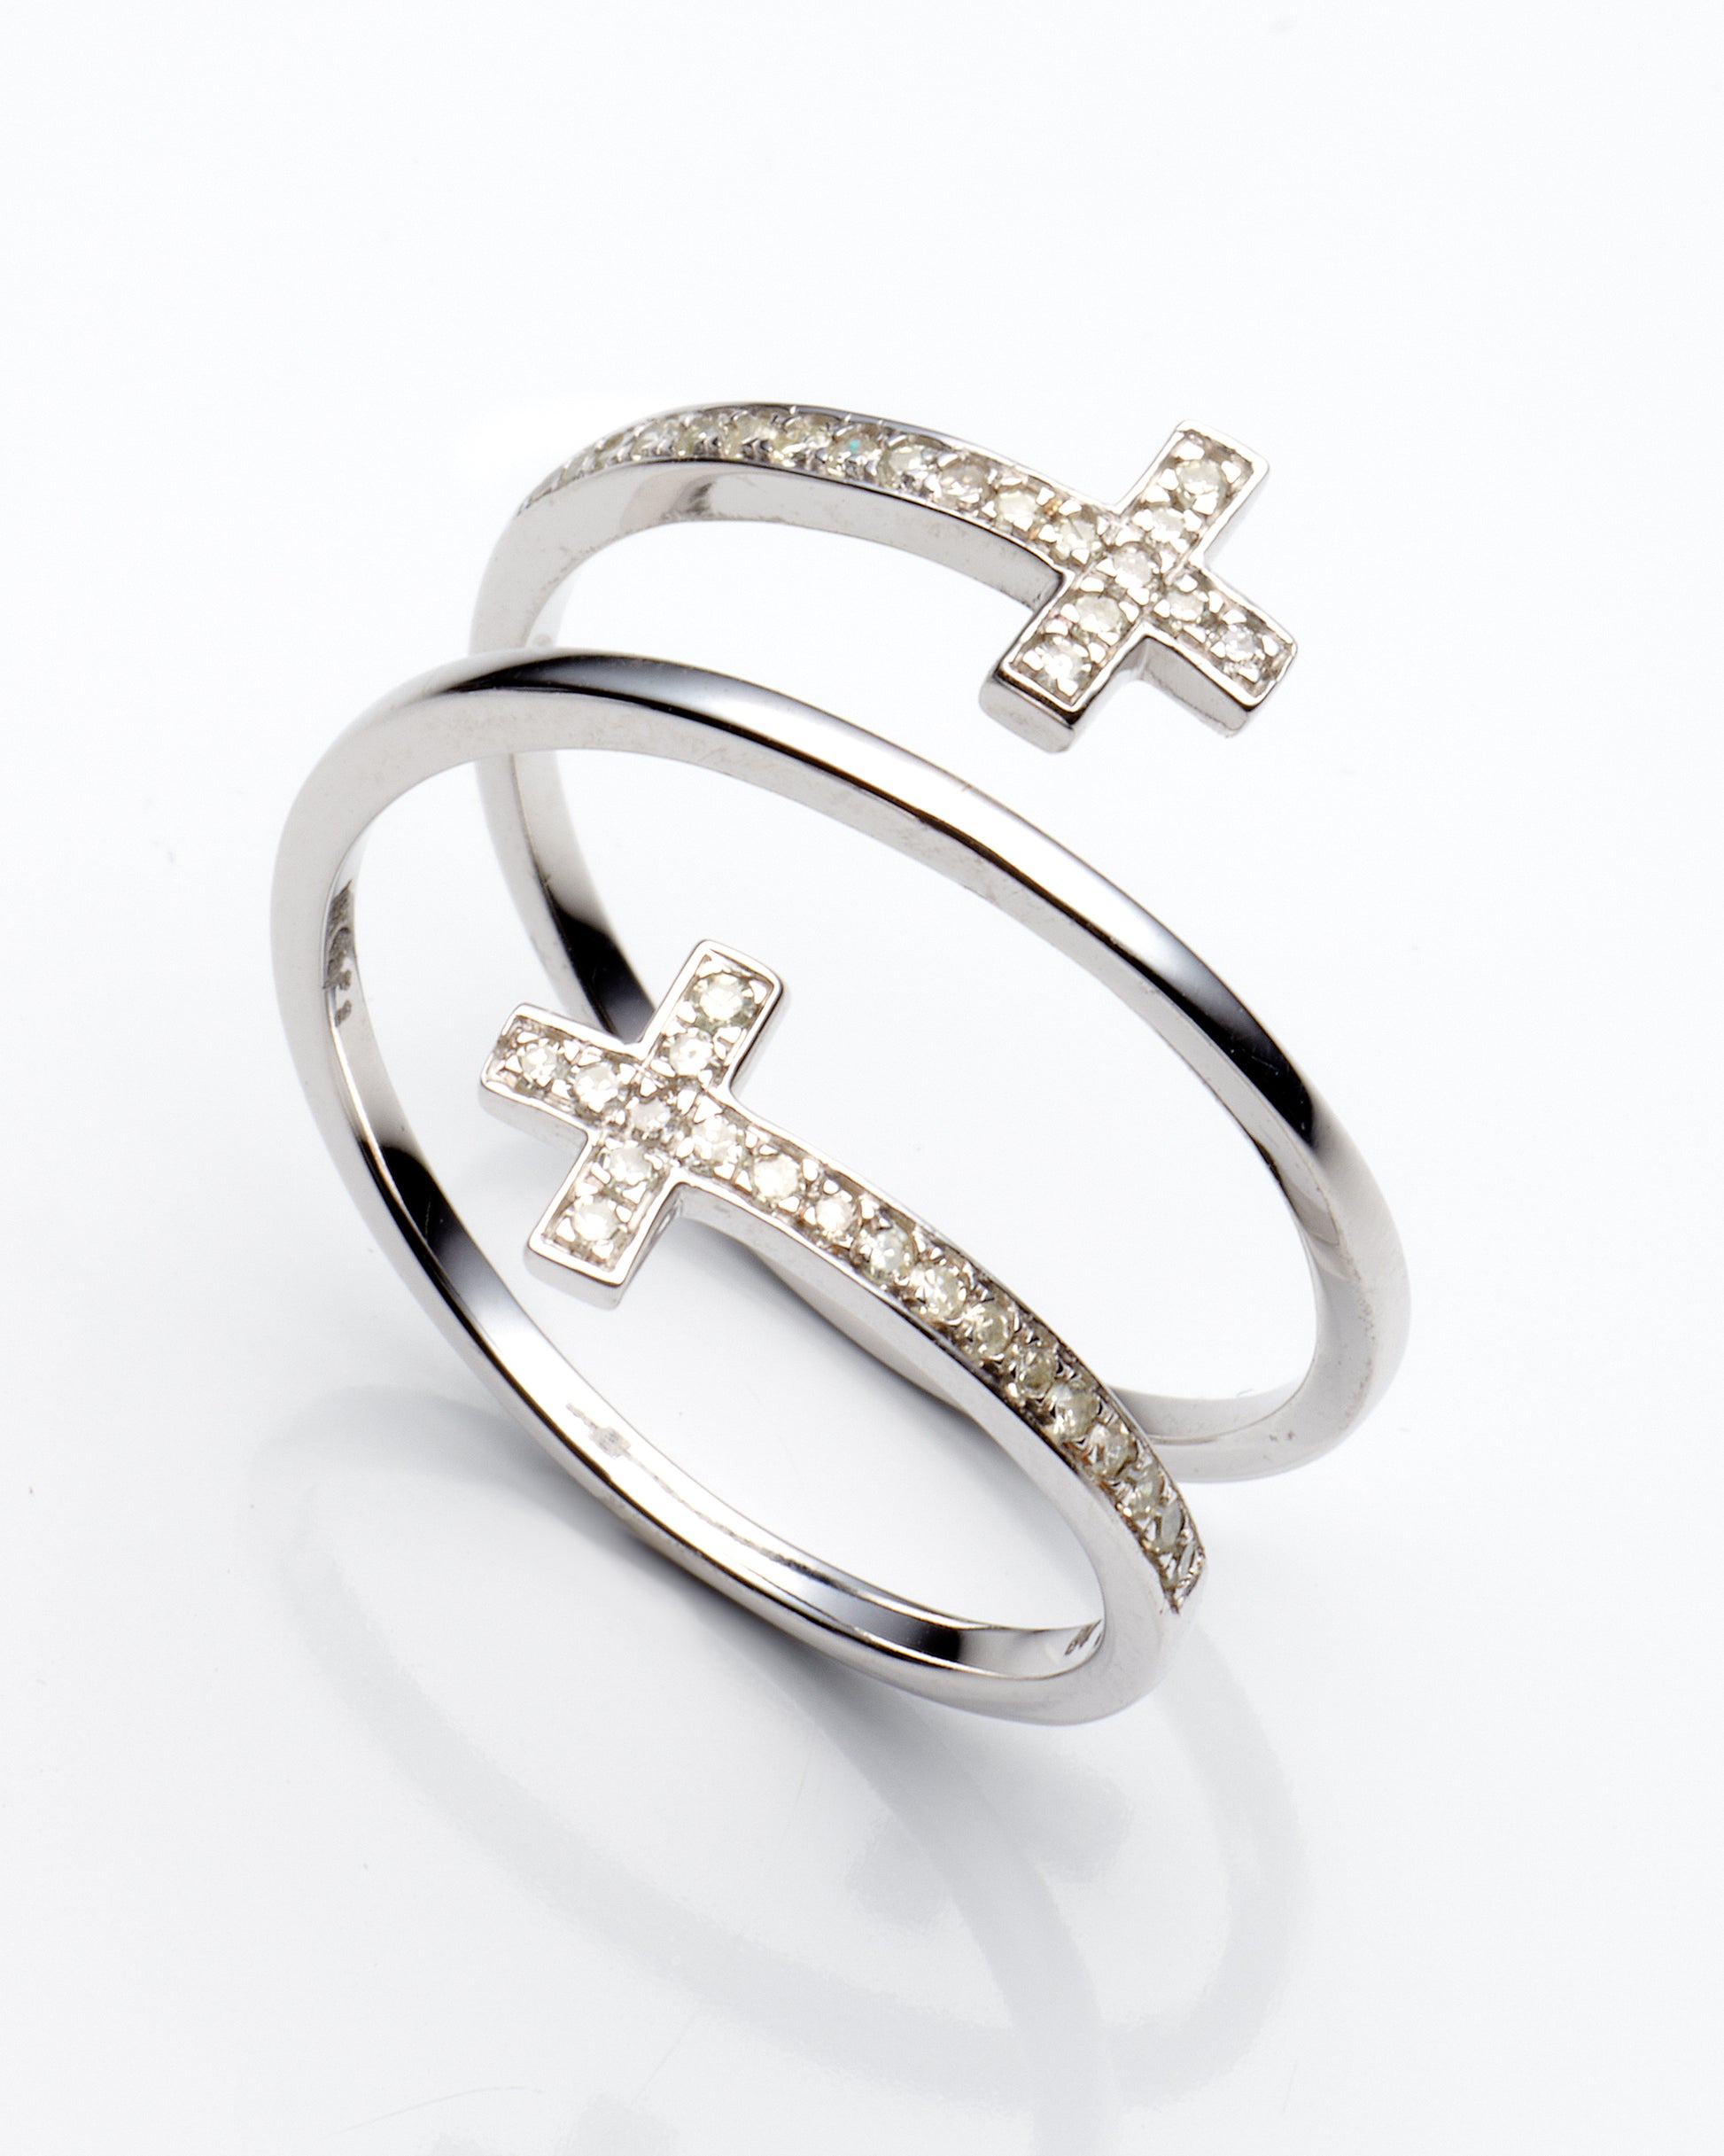 0.15Ctw 10K White Gold Lds Diamond Engagement Ring Size 7 1.4Dwt